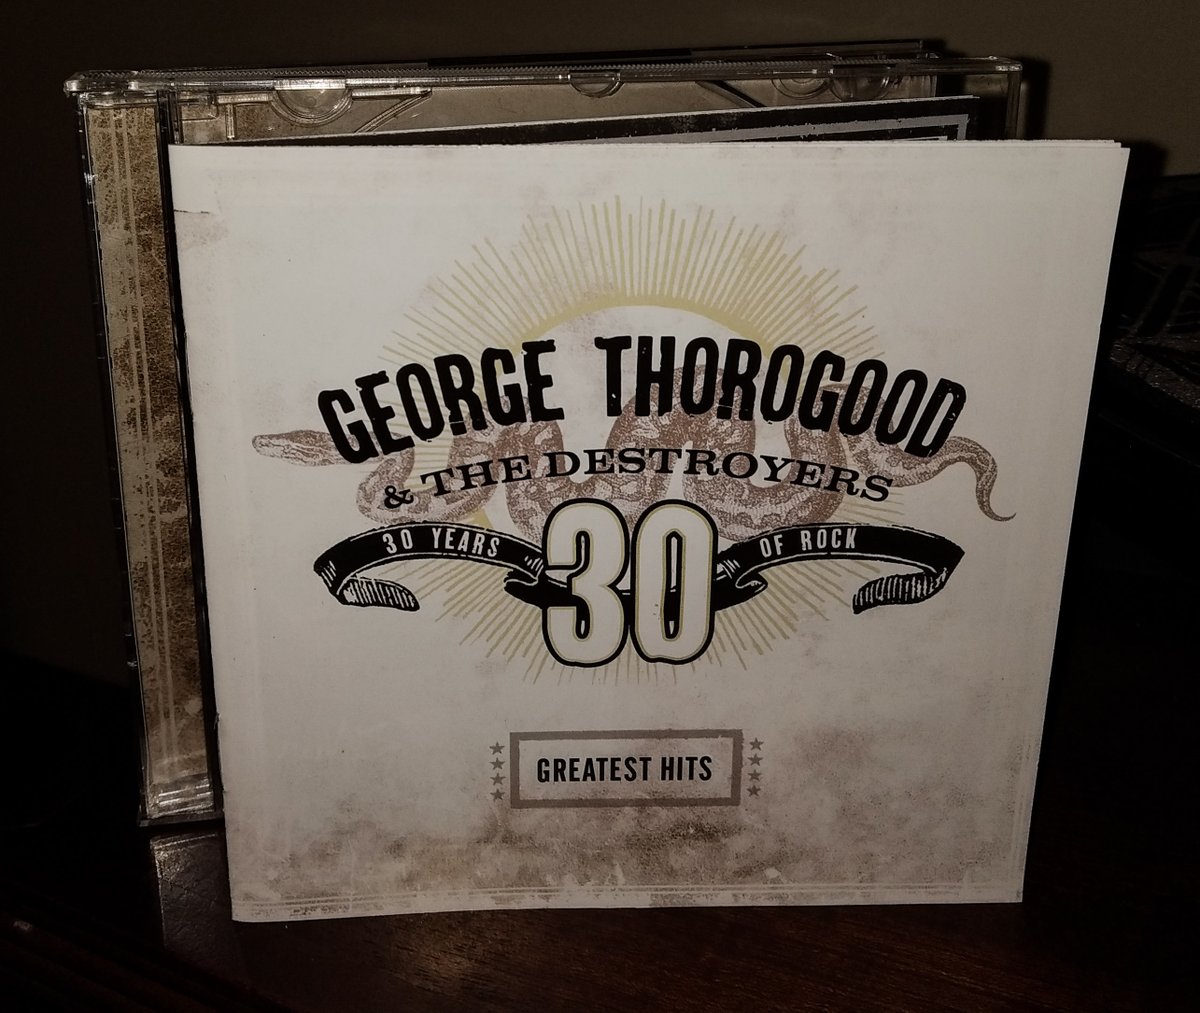 Rock & Roll 🍻

🇺🇲 GEORGE THOROGOOD & THE DESTROYERS: 'Greatest Hits: 30 Years of Rock' (2004) 

#GeorgeThorogoodAndTheDestroyers #NowPlaying #RockNRoll #Blues #BluesRock #Playlist #CD  #GeorgeThorogood